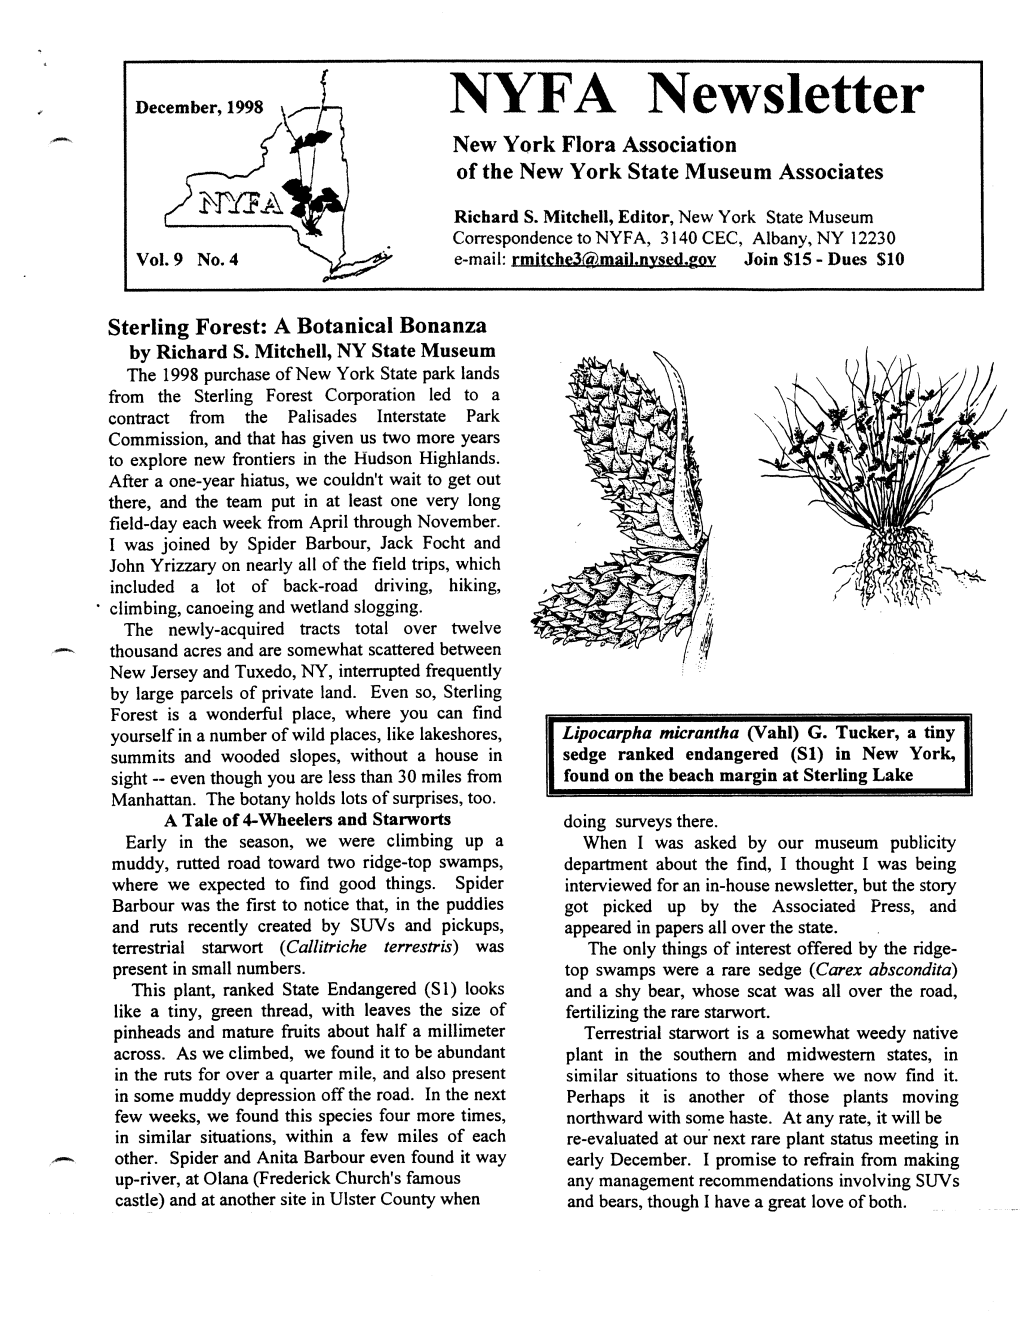 NYF a Newsletter New York Flora Association of the New York State Museum Associates